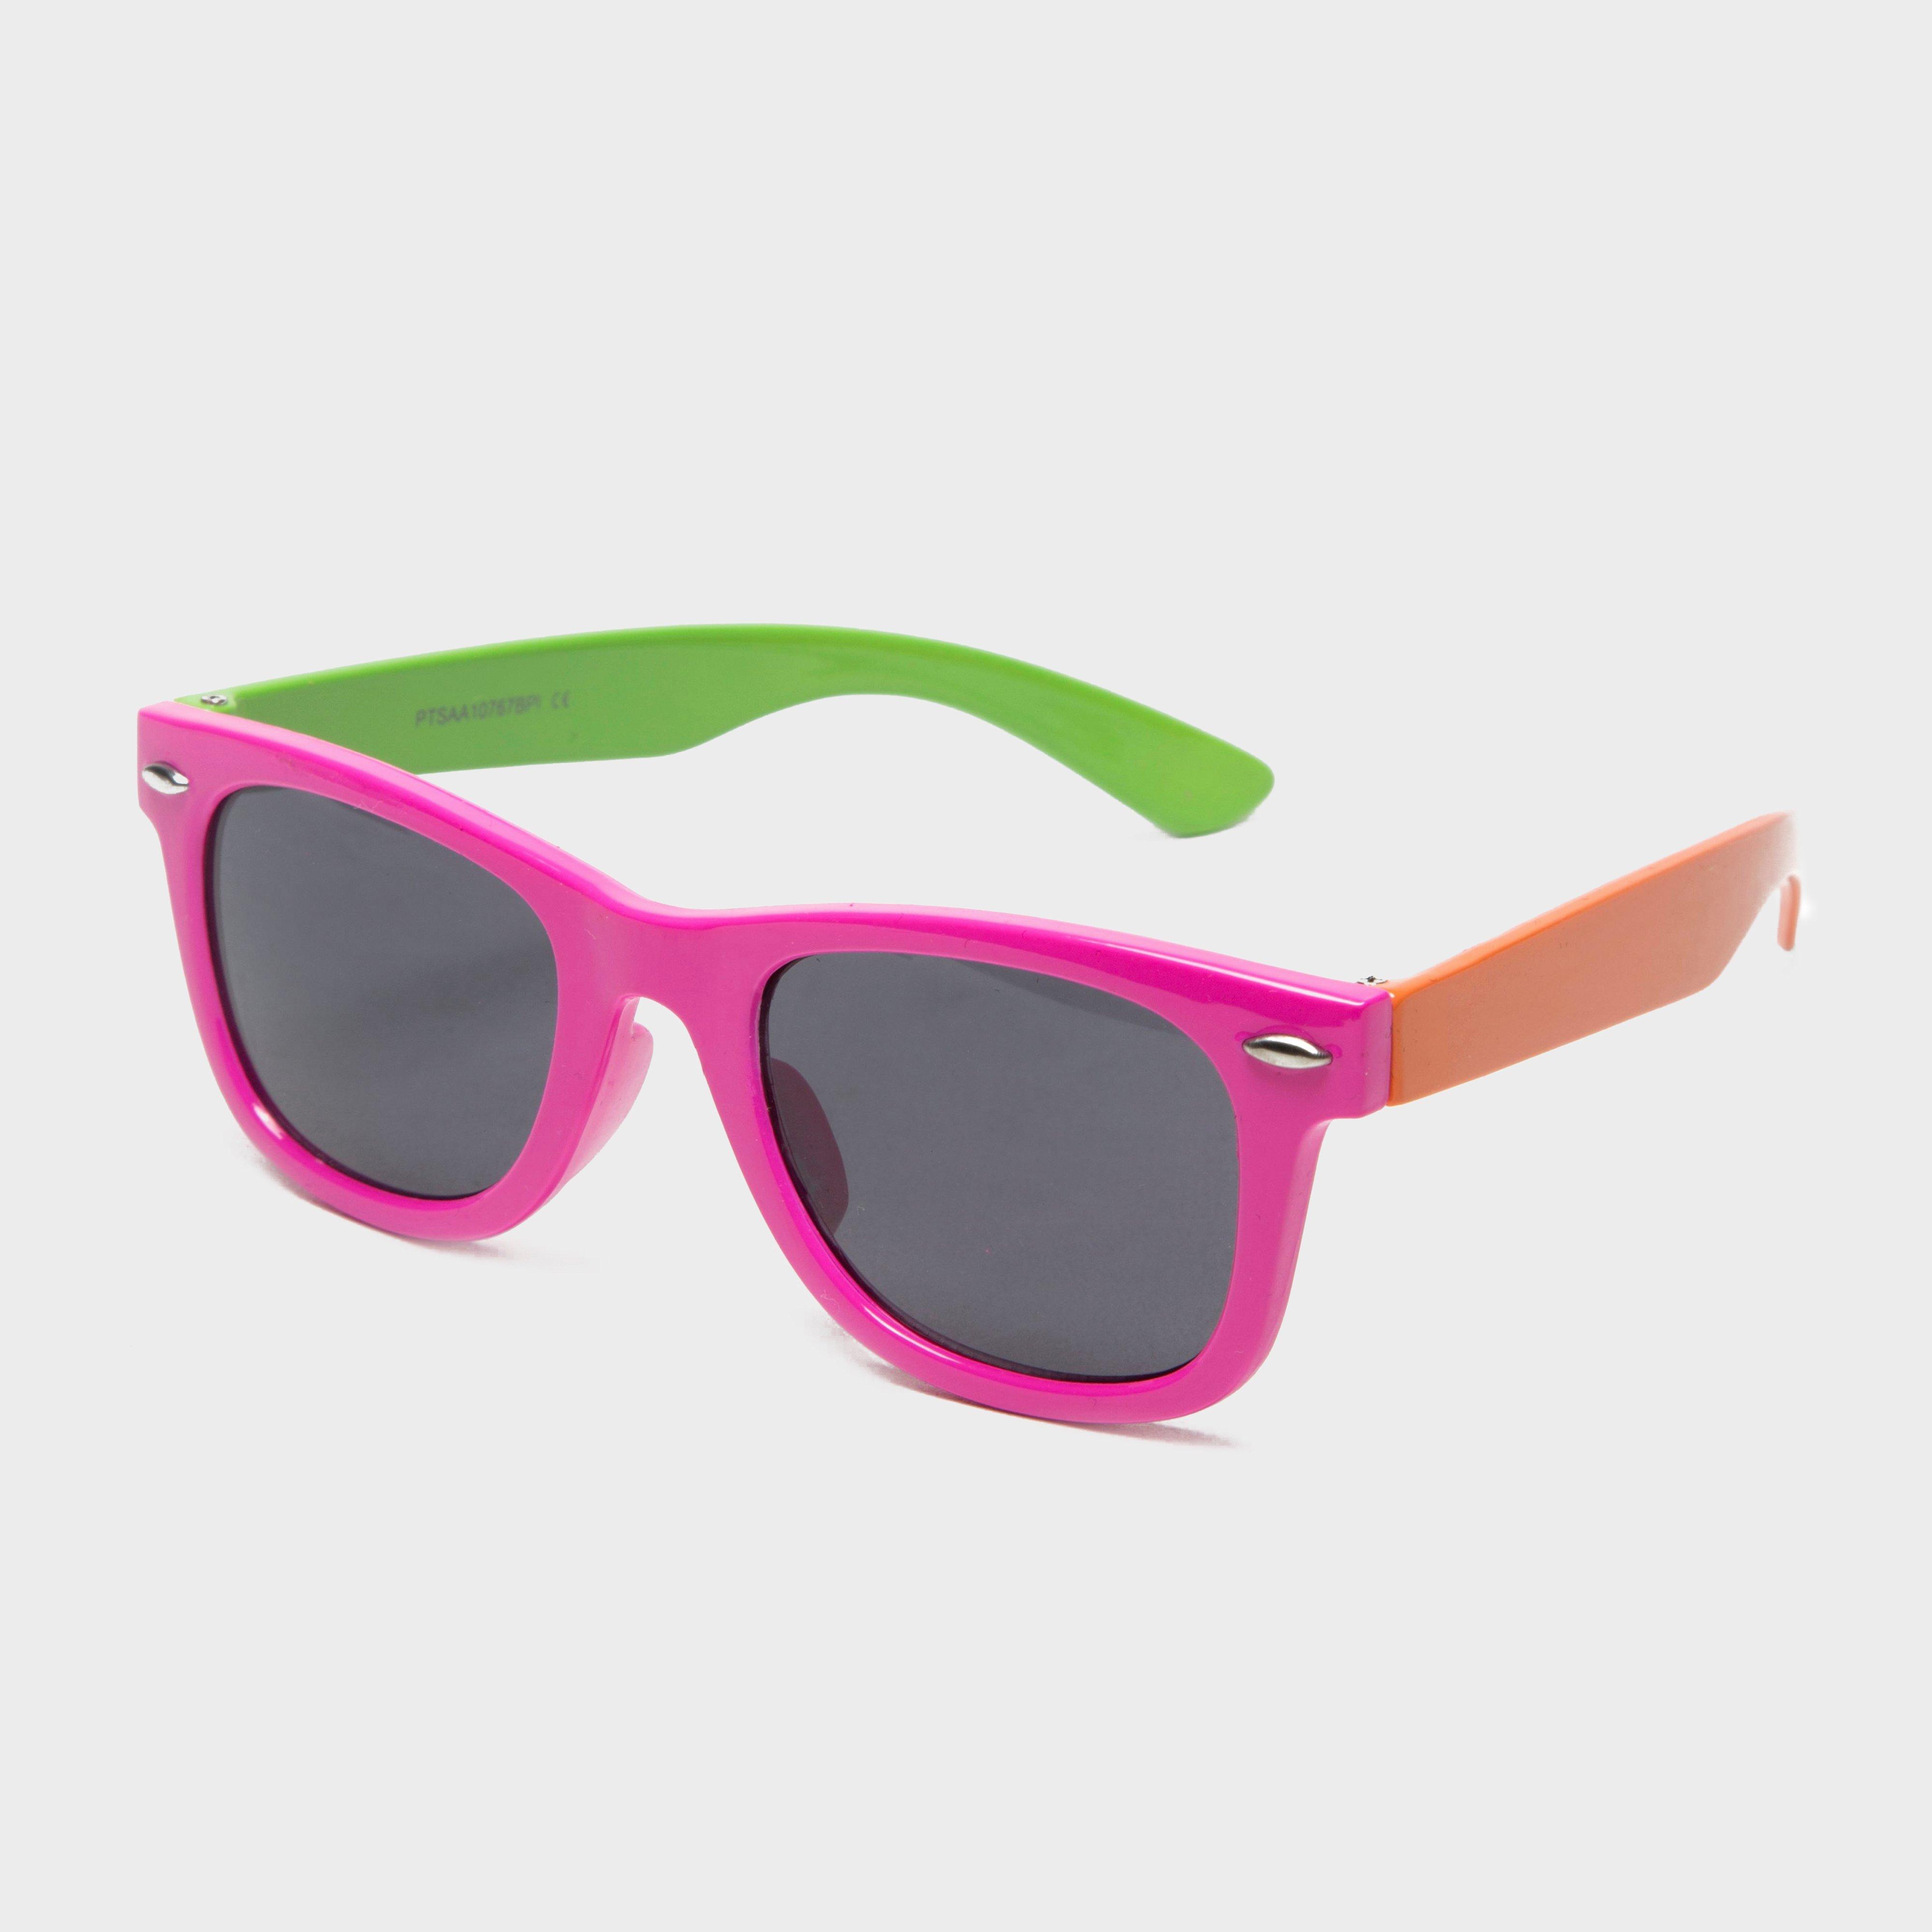 Peter Storm Girls Multi-coloured Sunglasses - Pink/bpi  Pink/bpi